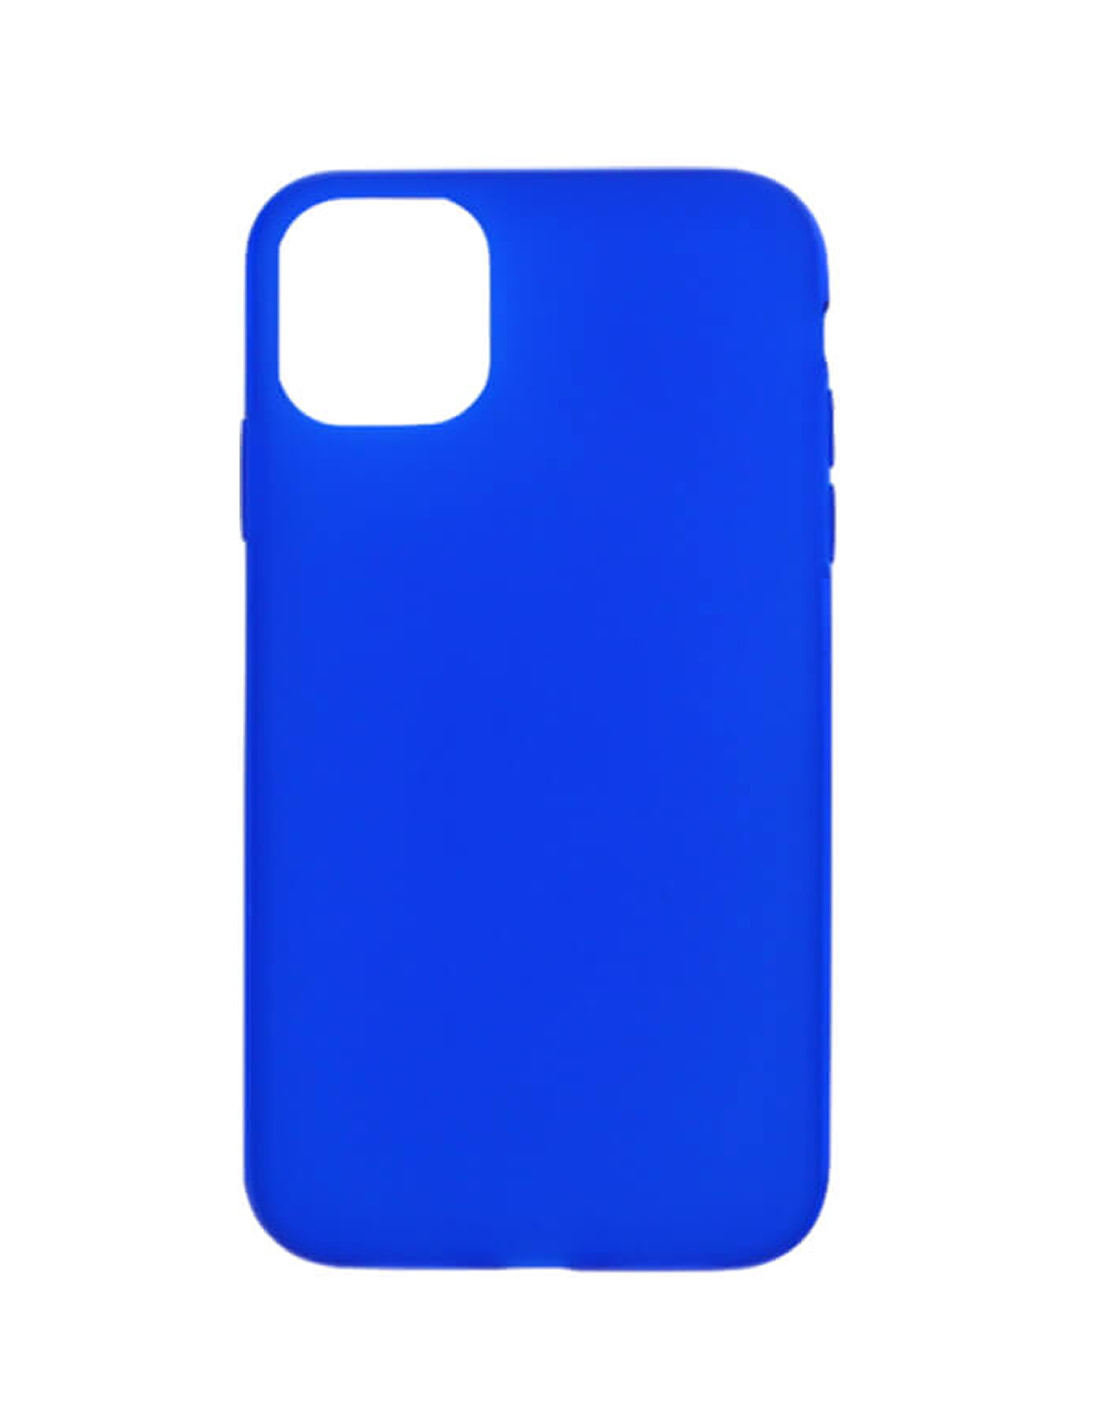 Funda Carcasa azul silicona iPhone 11 Pro Max